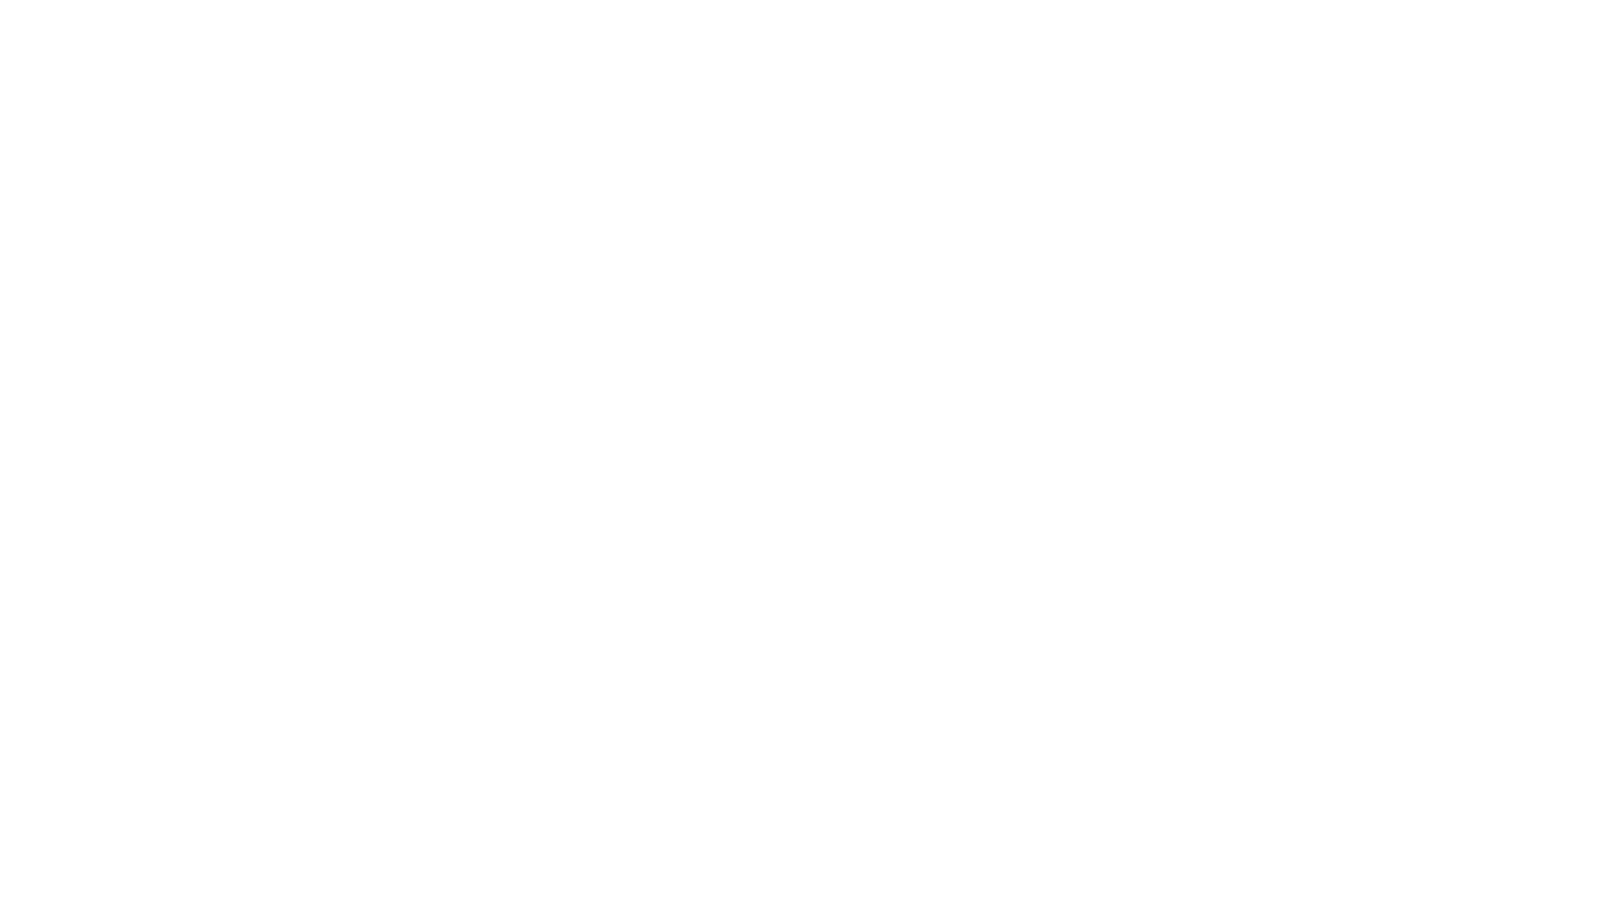 Meie esimene filmisaade :) Räägime filmidest/sarjadest, mida viimasel ajal oleme vaadanud.

Filmid:
You People
Avatar: The Way of Water 
Triangle of Sadness
The Menu
Glass Onion: A Knives Out Mystery
Erik Kivisüda
Strange World
Kaleidoscope
White Noise
House of Gucci